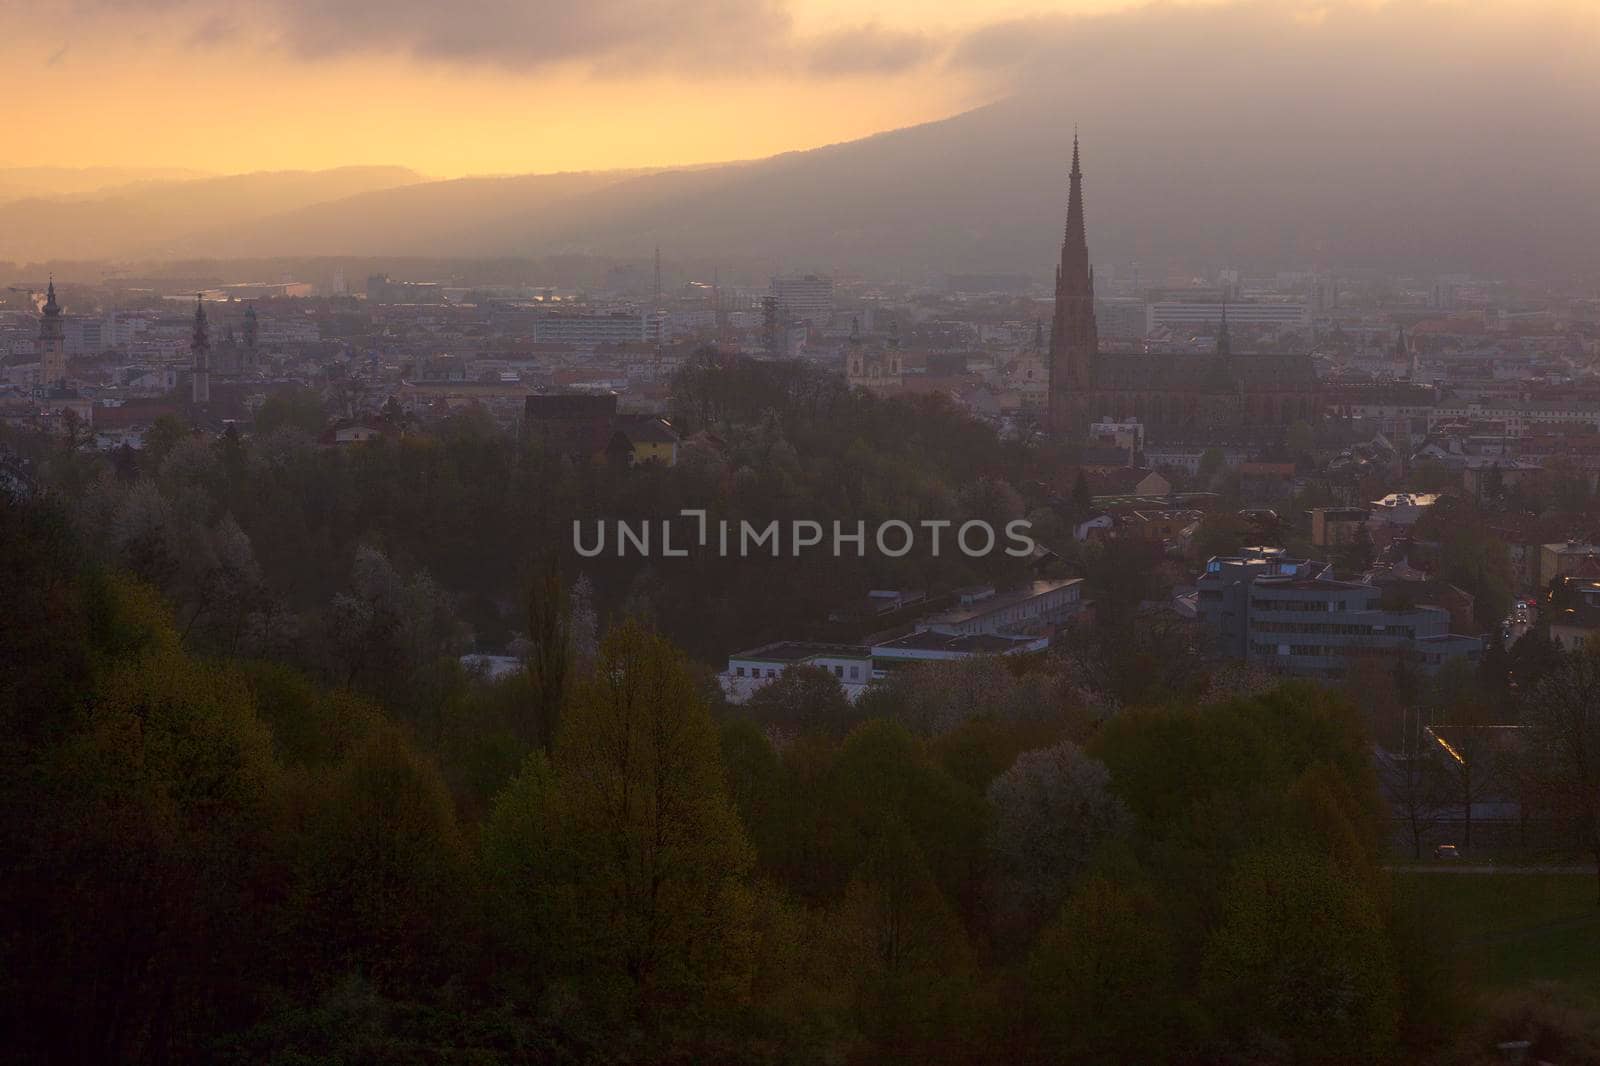 Linz panorama at sunrise. Linz, Upper Austria, Austria.